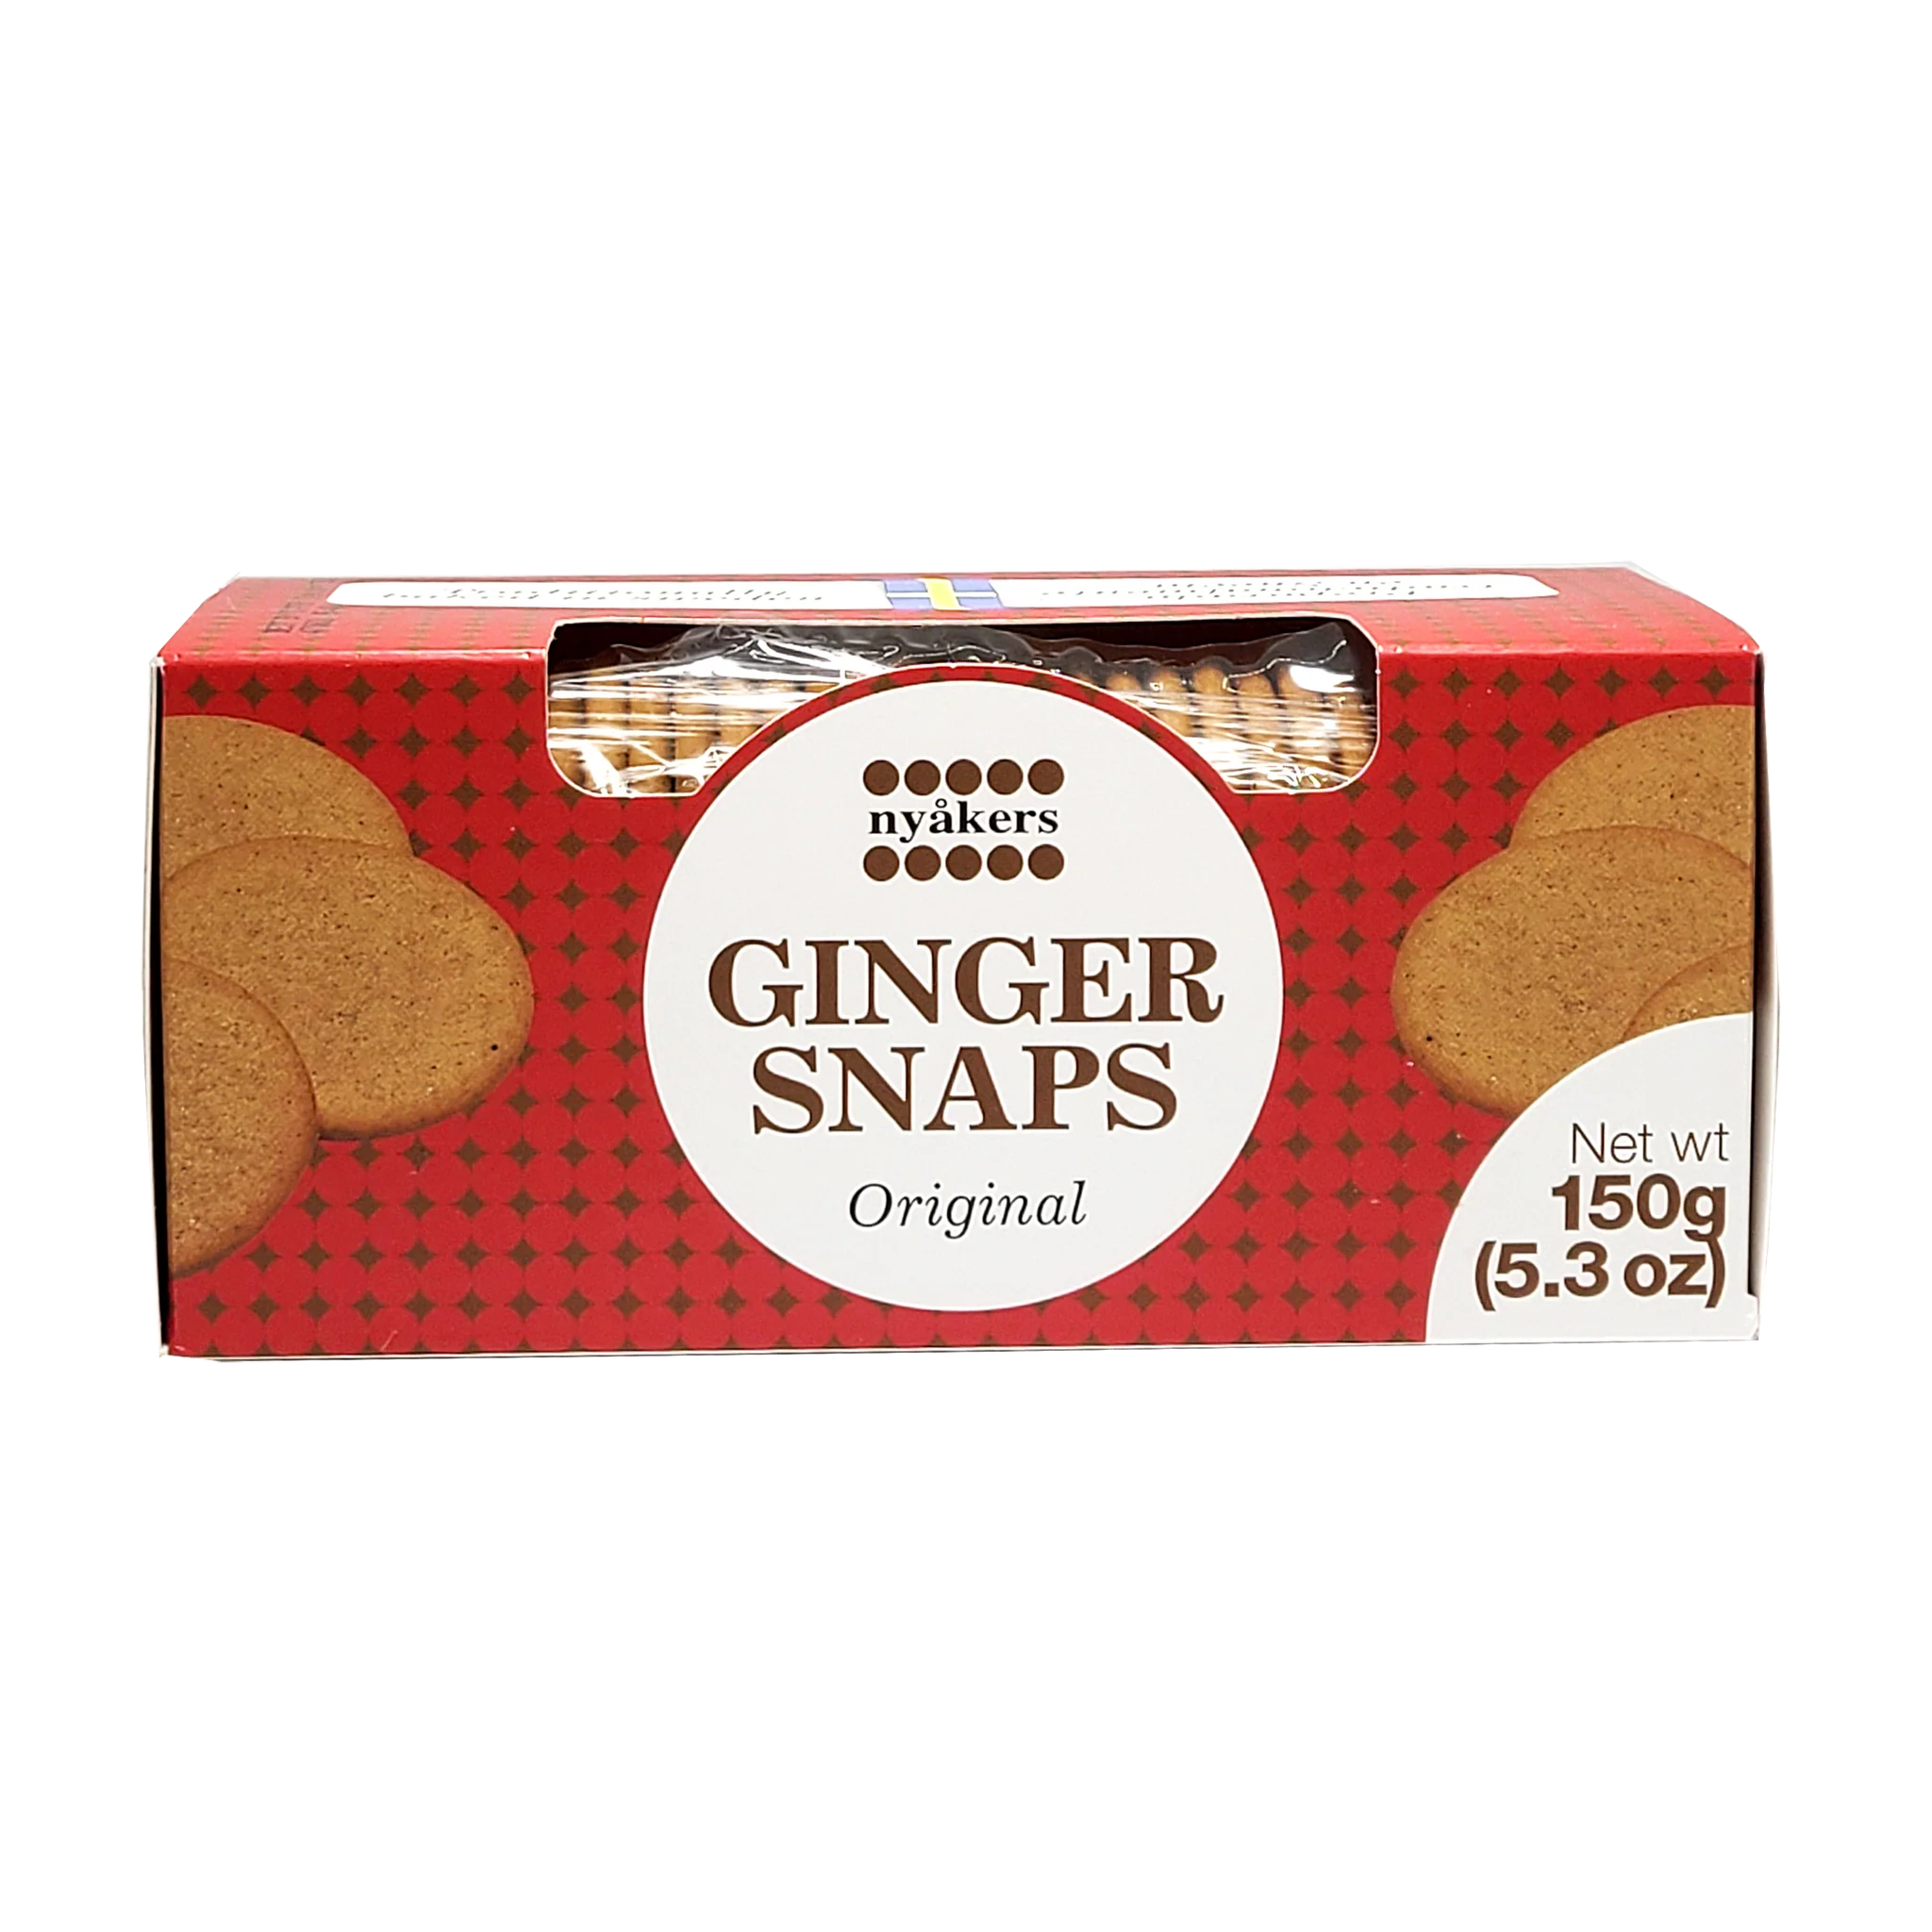 Nyakers Original Ginger Snaps, 5.3oz